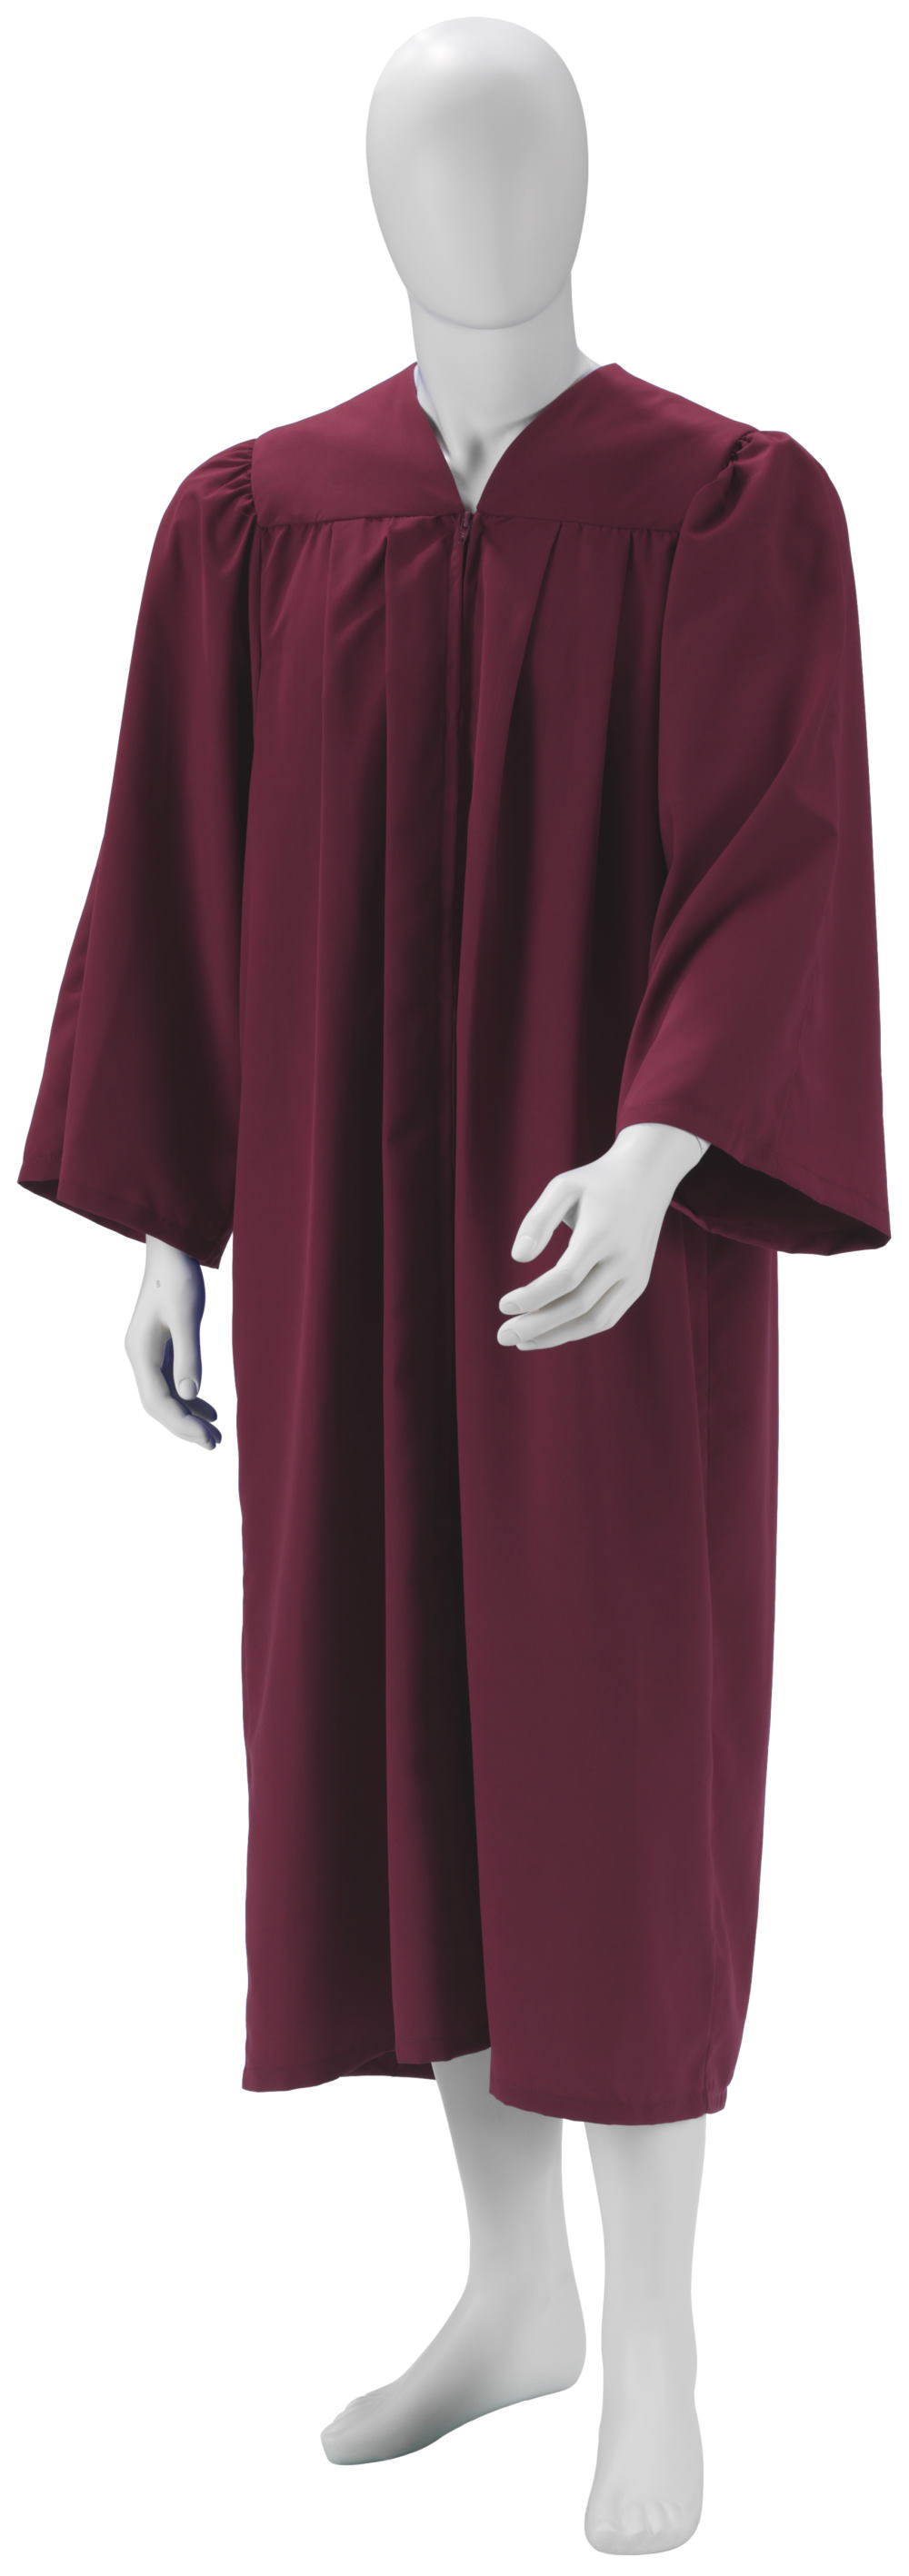 Artneedle Graduation Gown, Graduations Robe weinrot